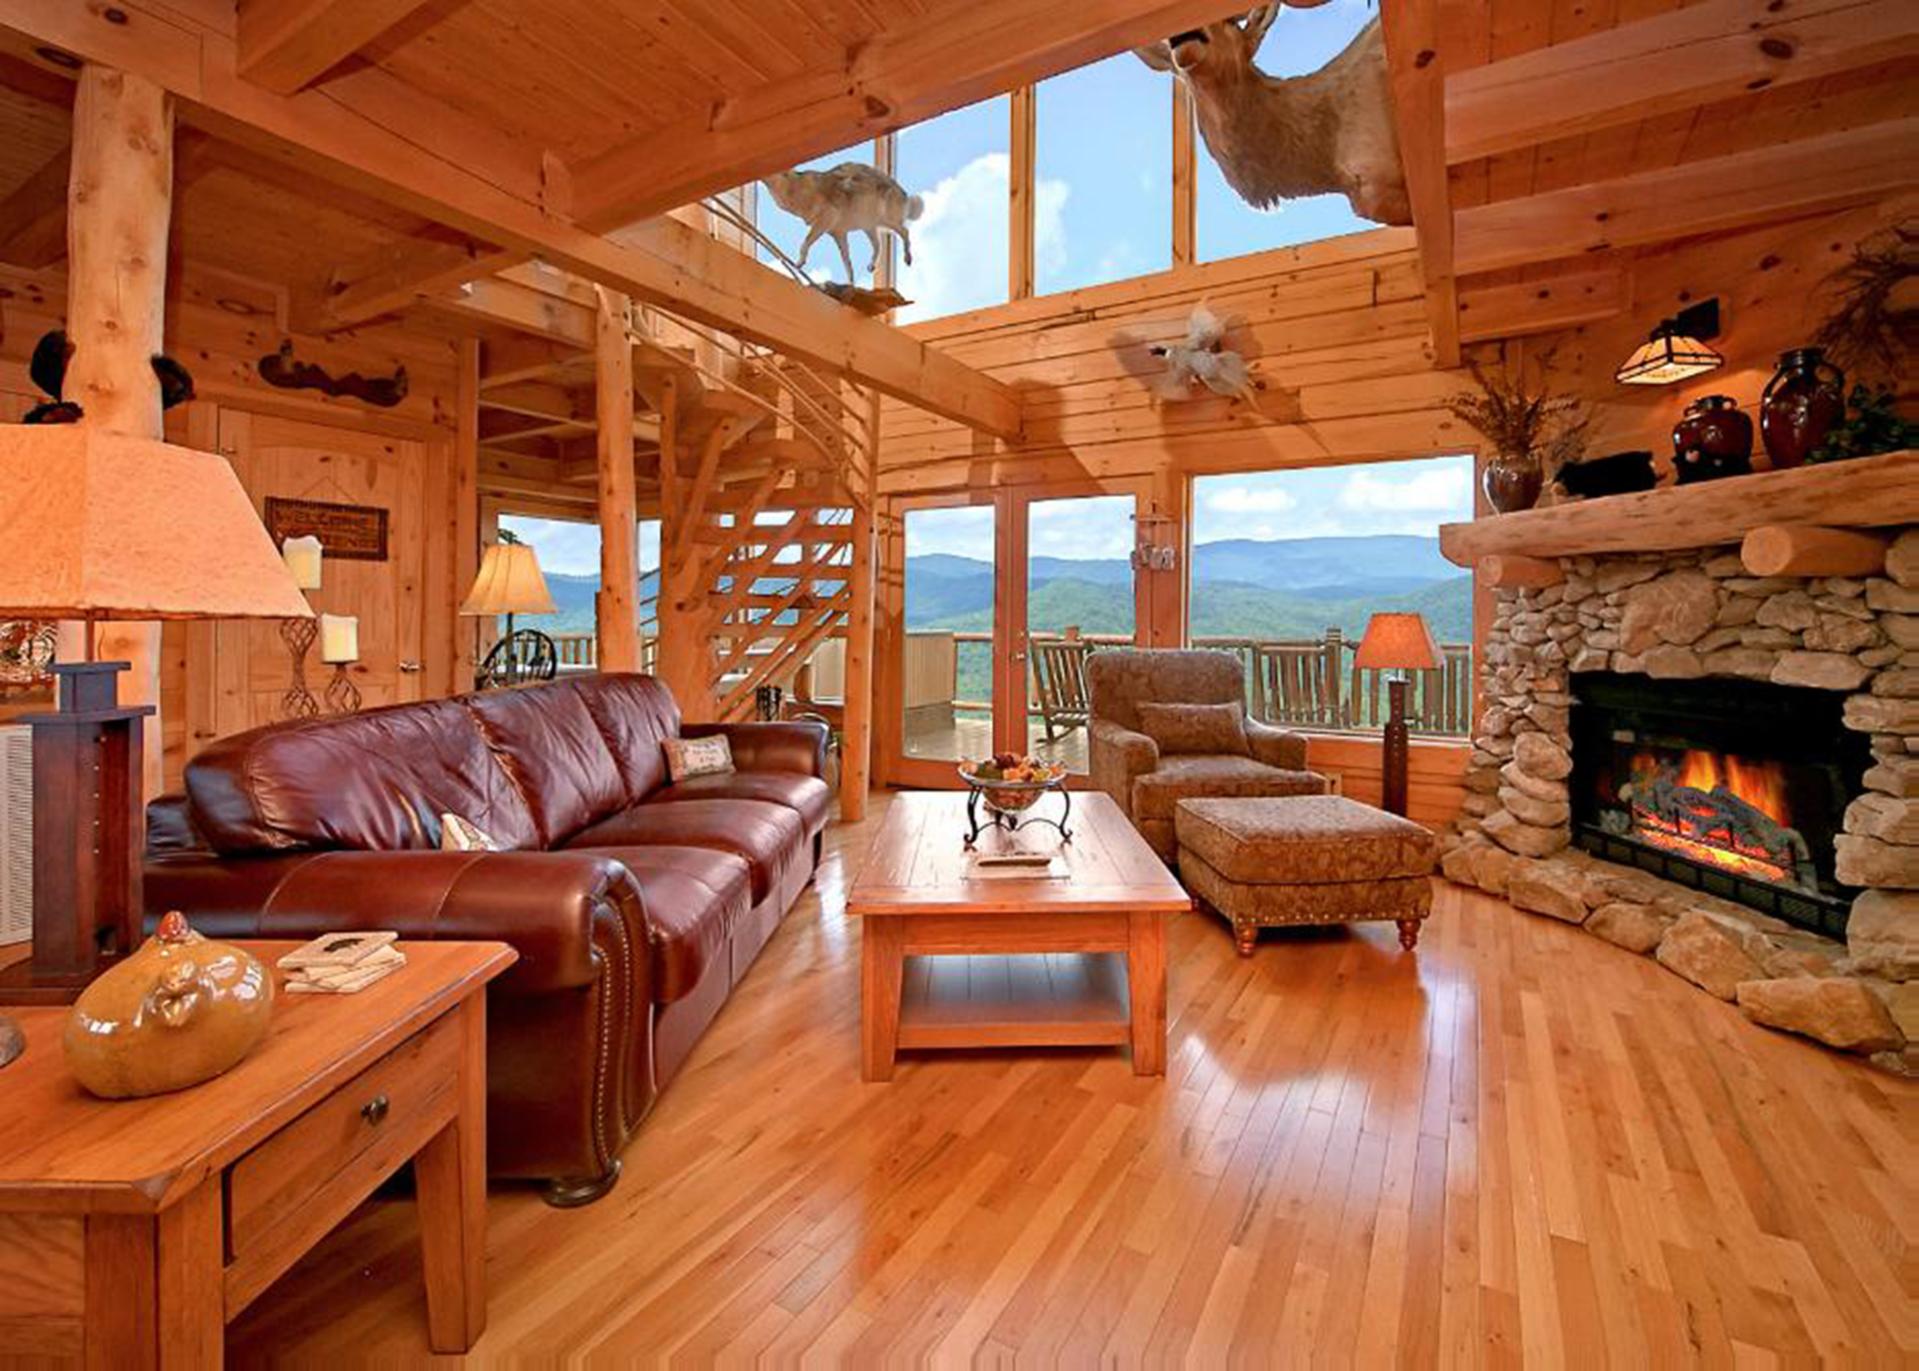  Open floor-plan living room with wood fireplace.